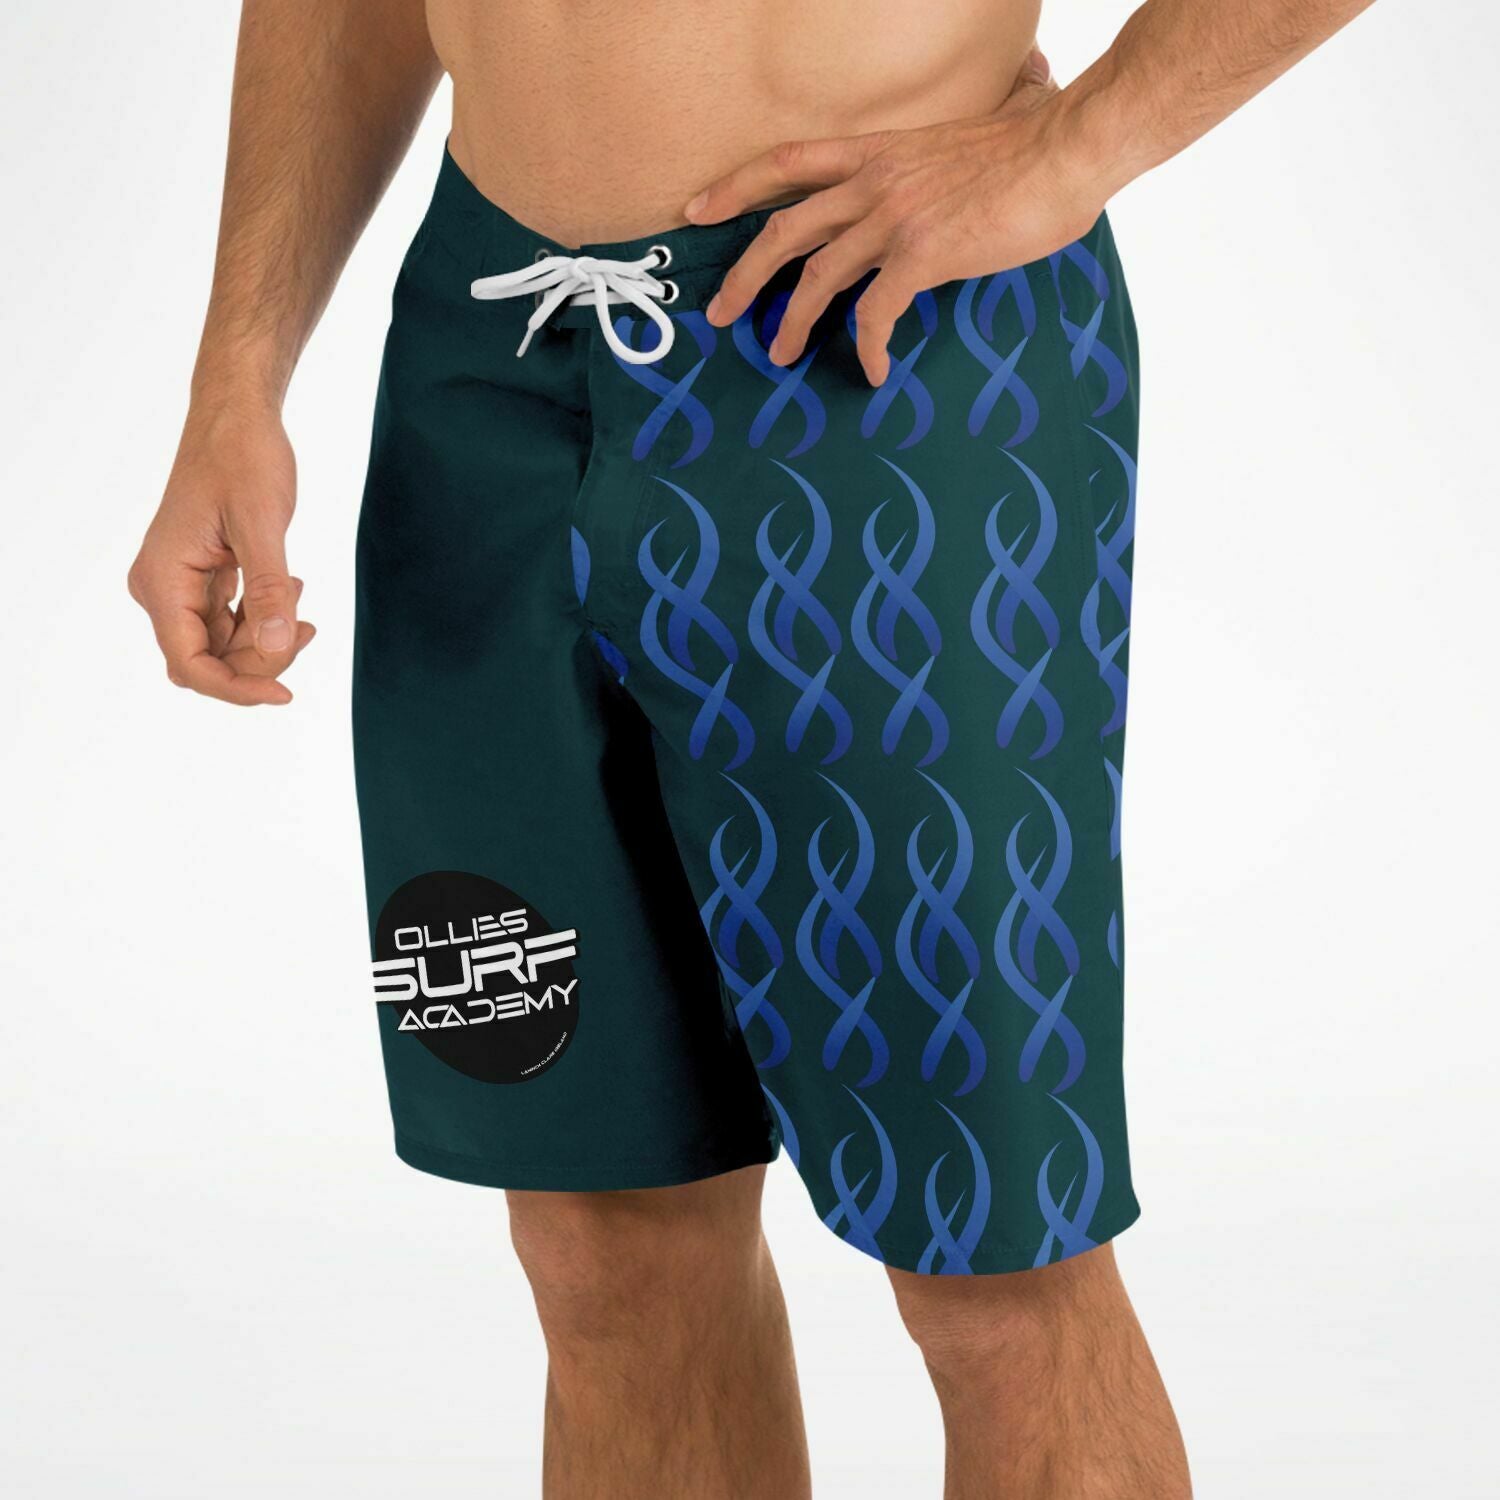 Ollies surf academy Board Shorts